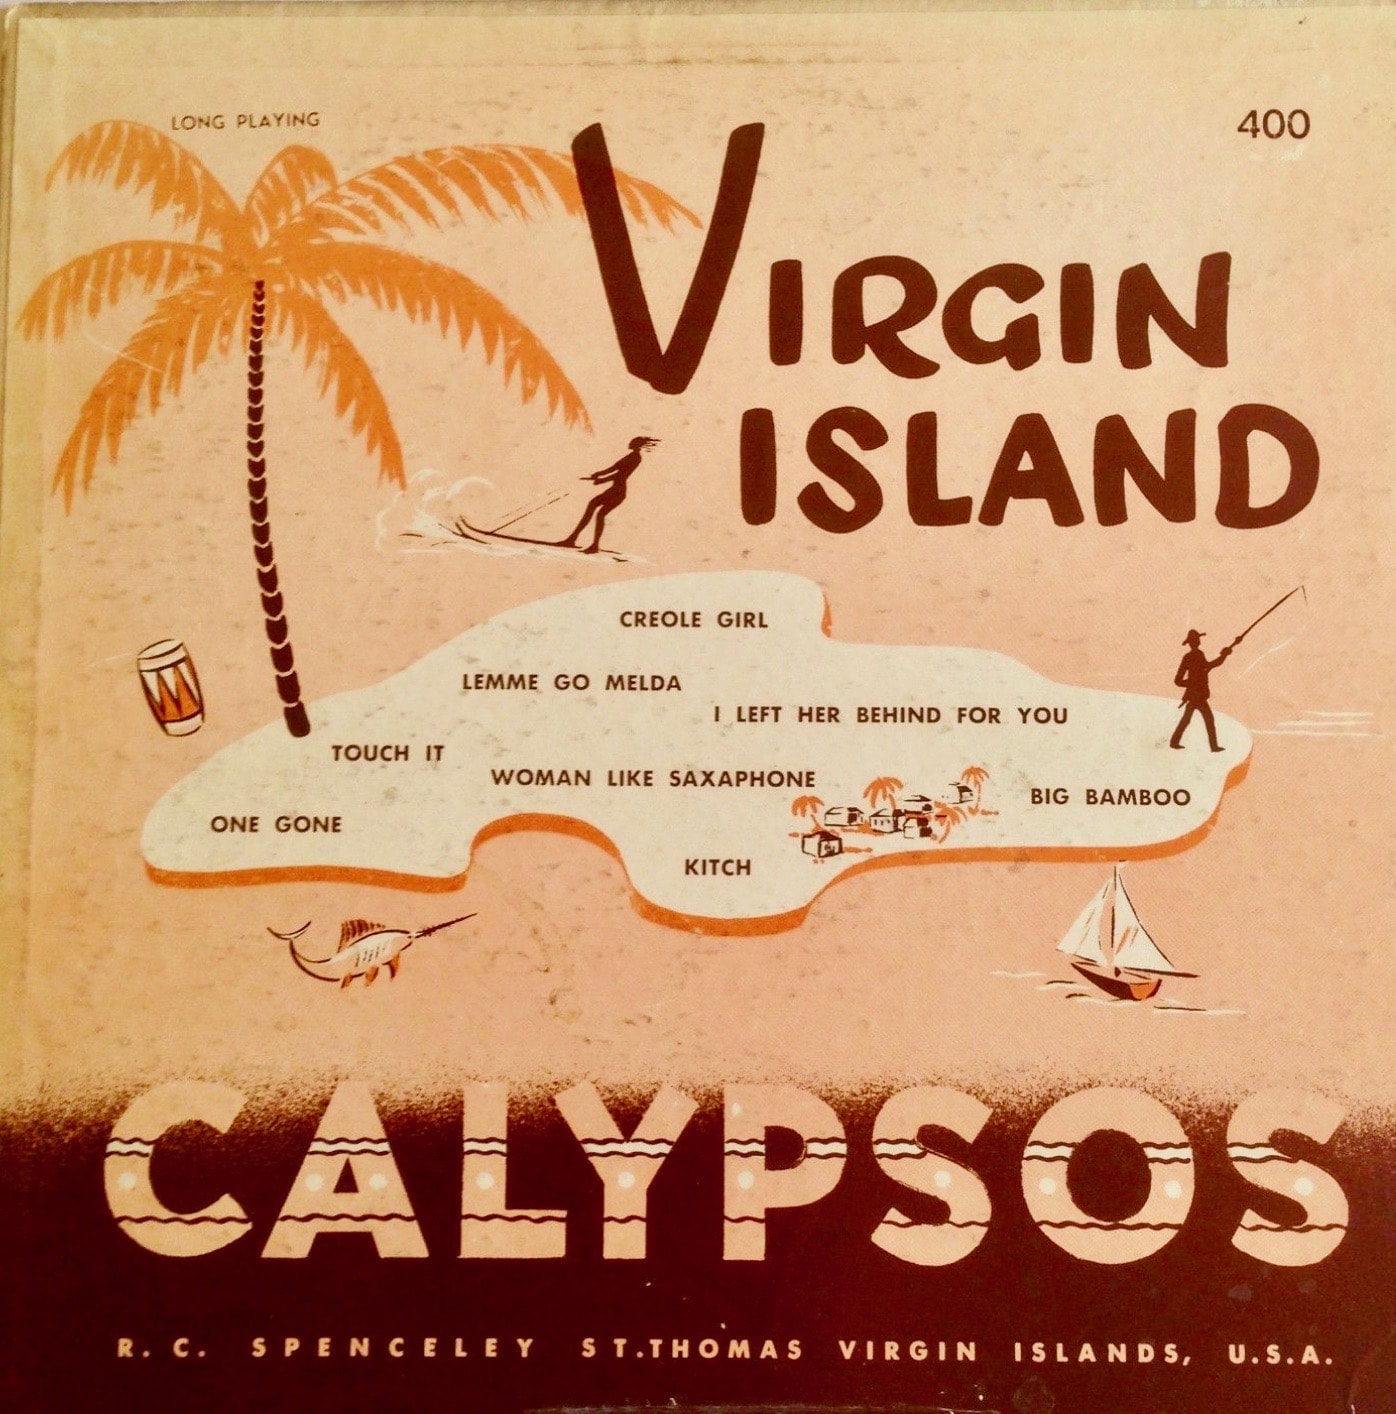 Virgin Islands Calypso Music